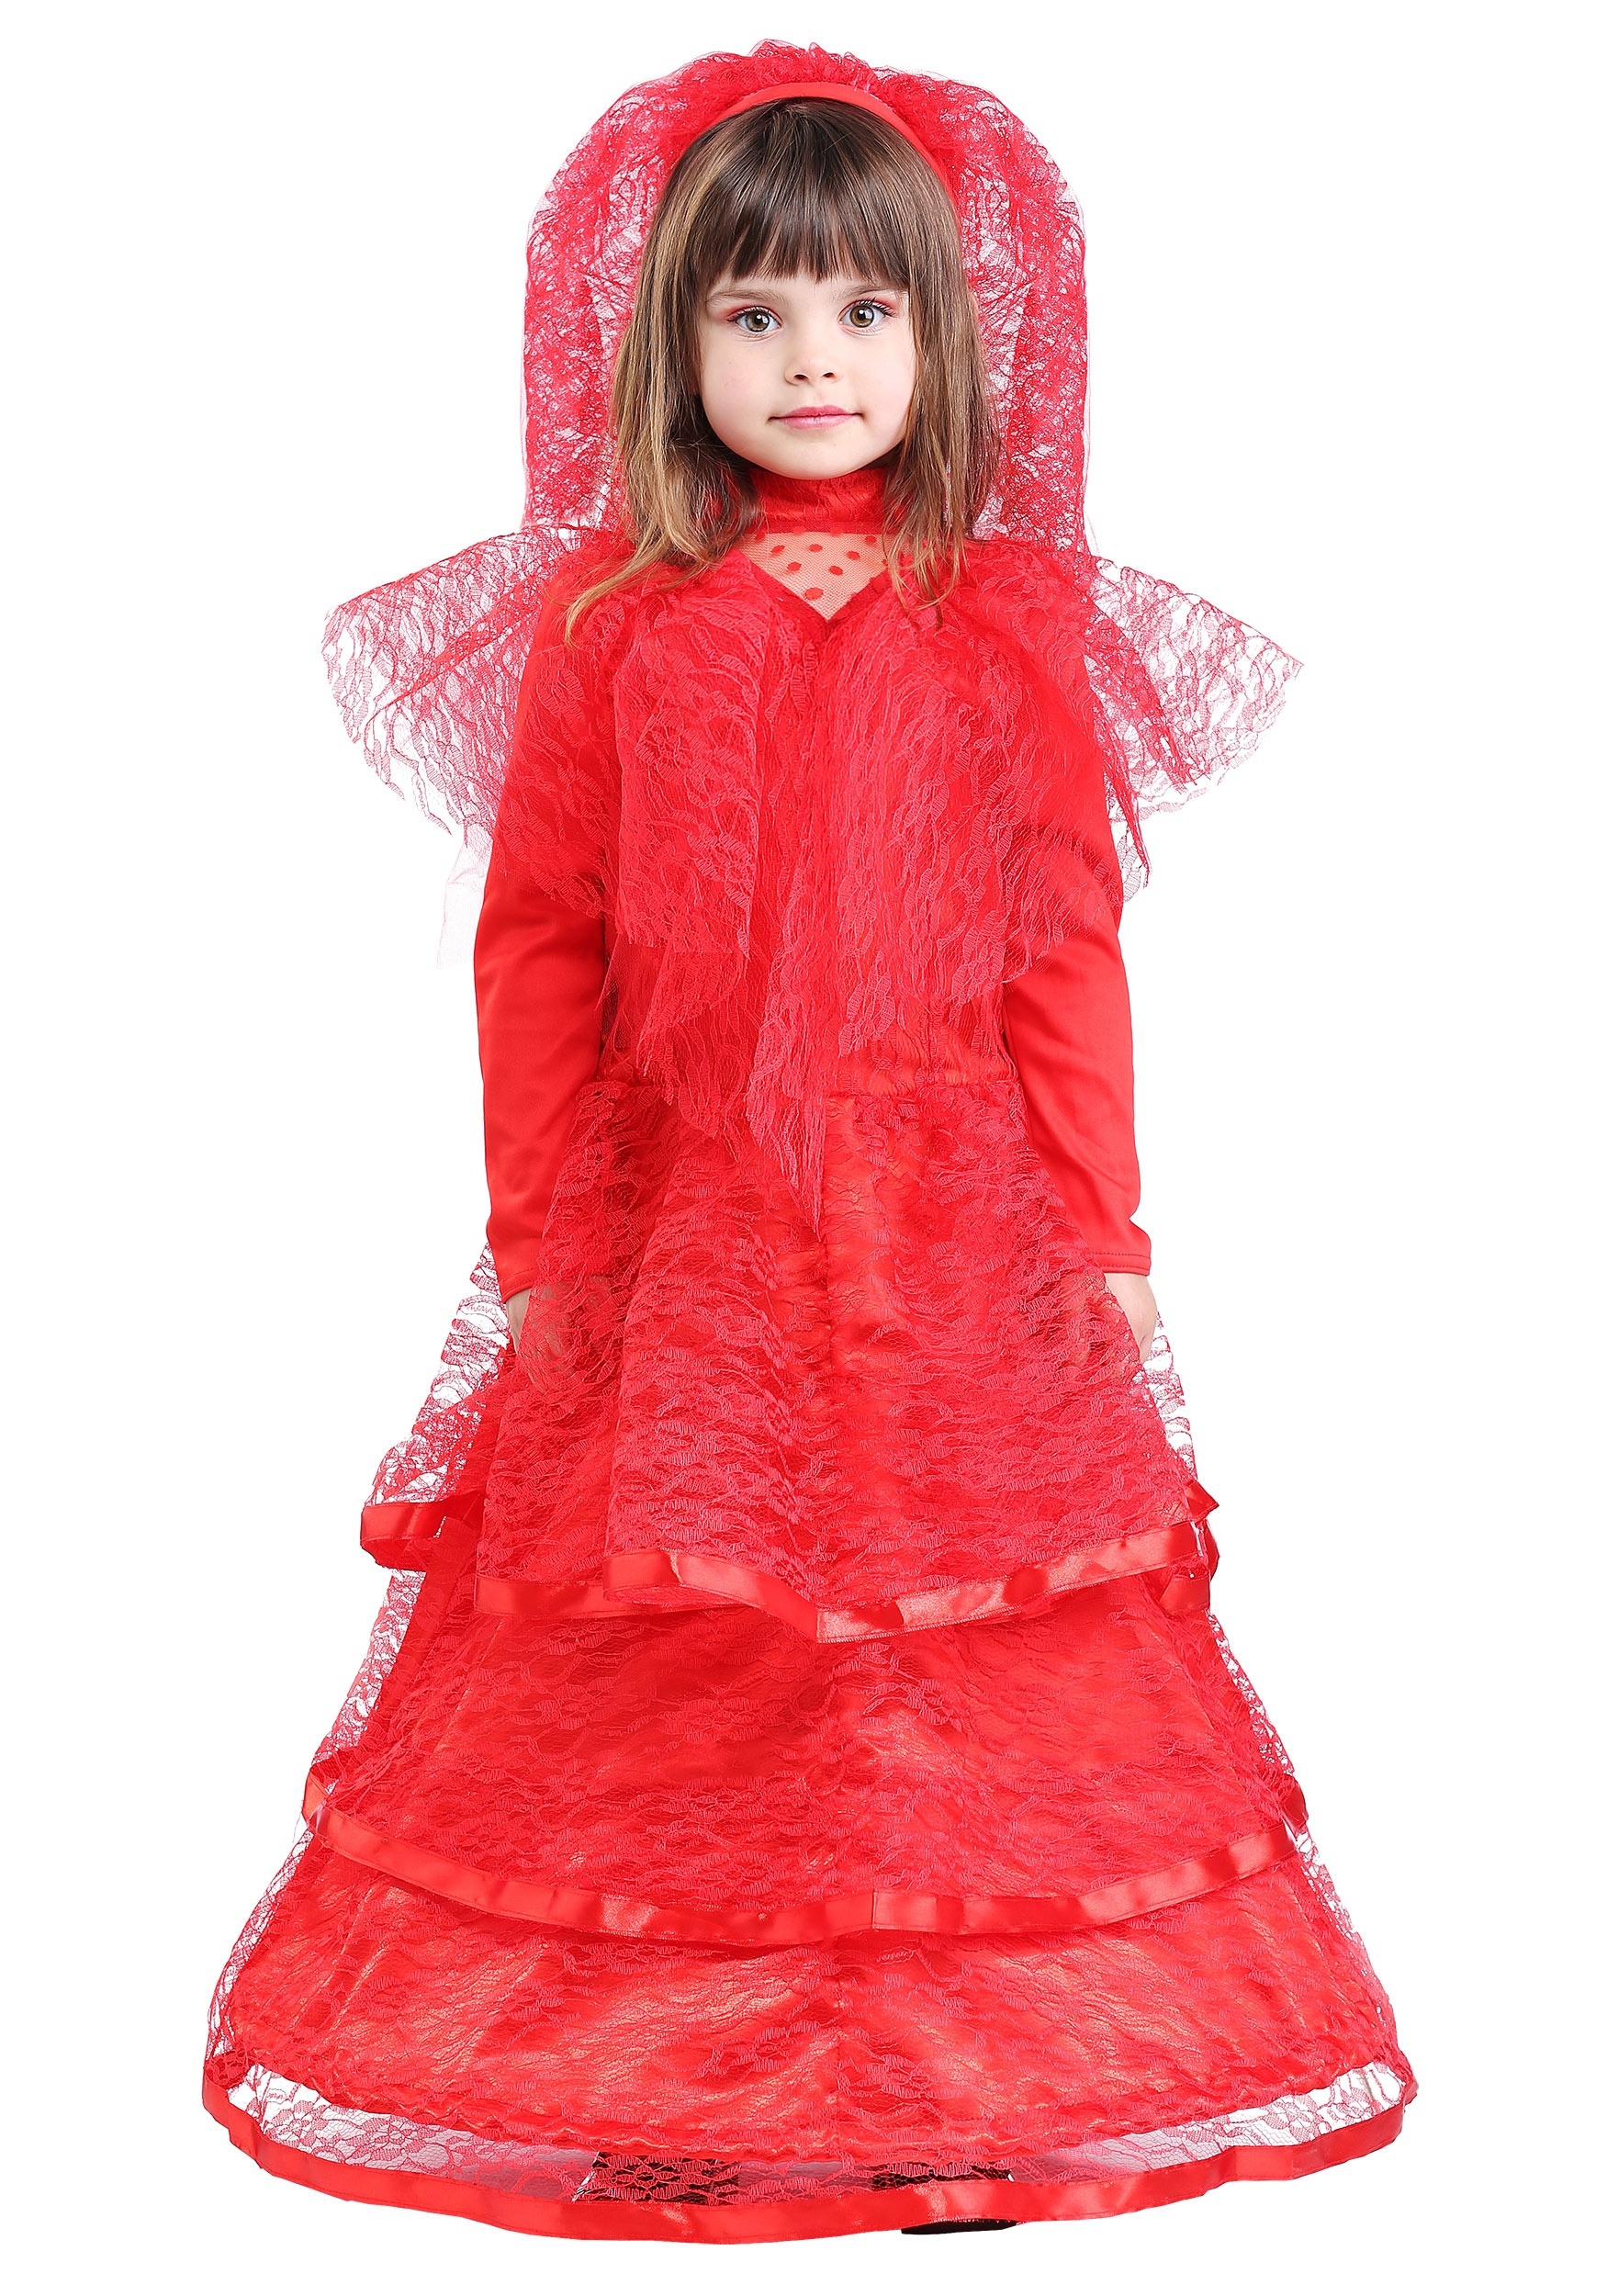 Photos - Fancy Dress Winsun Dress FUN Costumes Gothic Red Wedding Toddler Dress Red FUN2151TD 